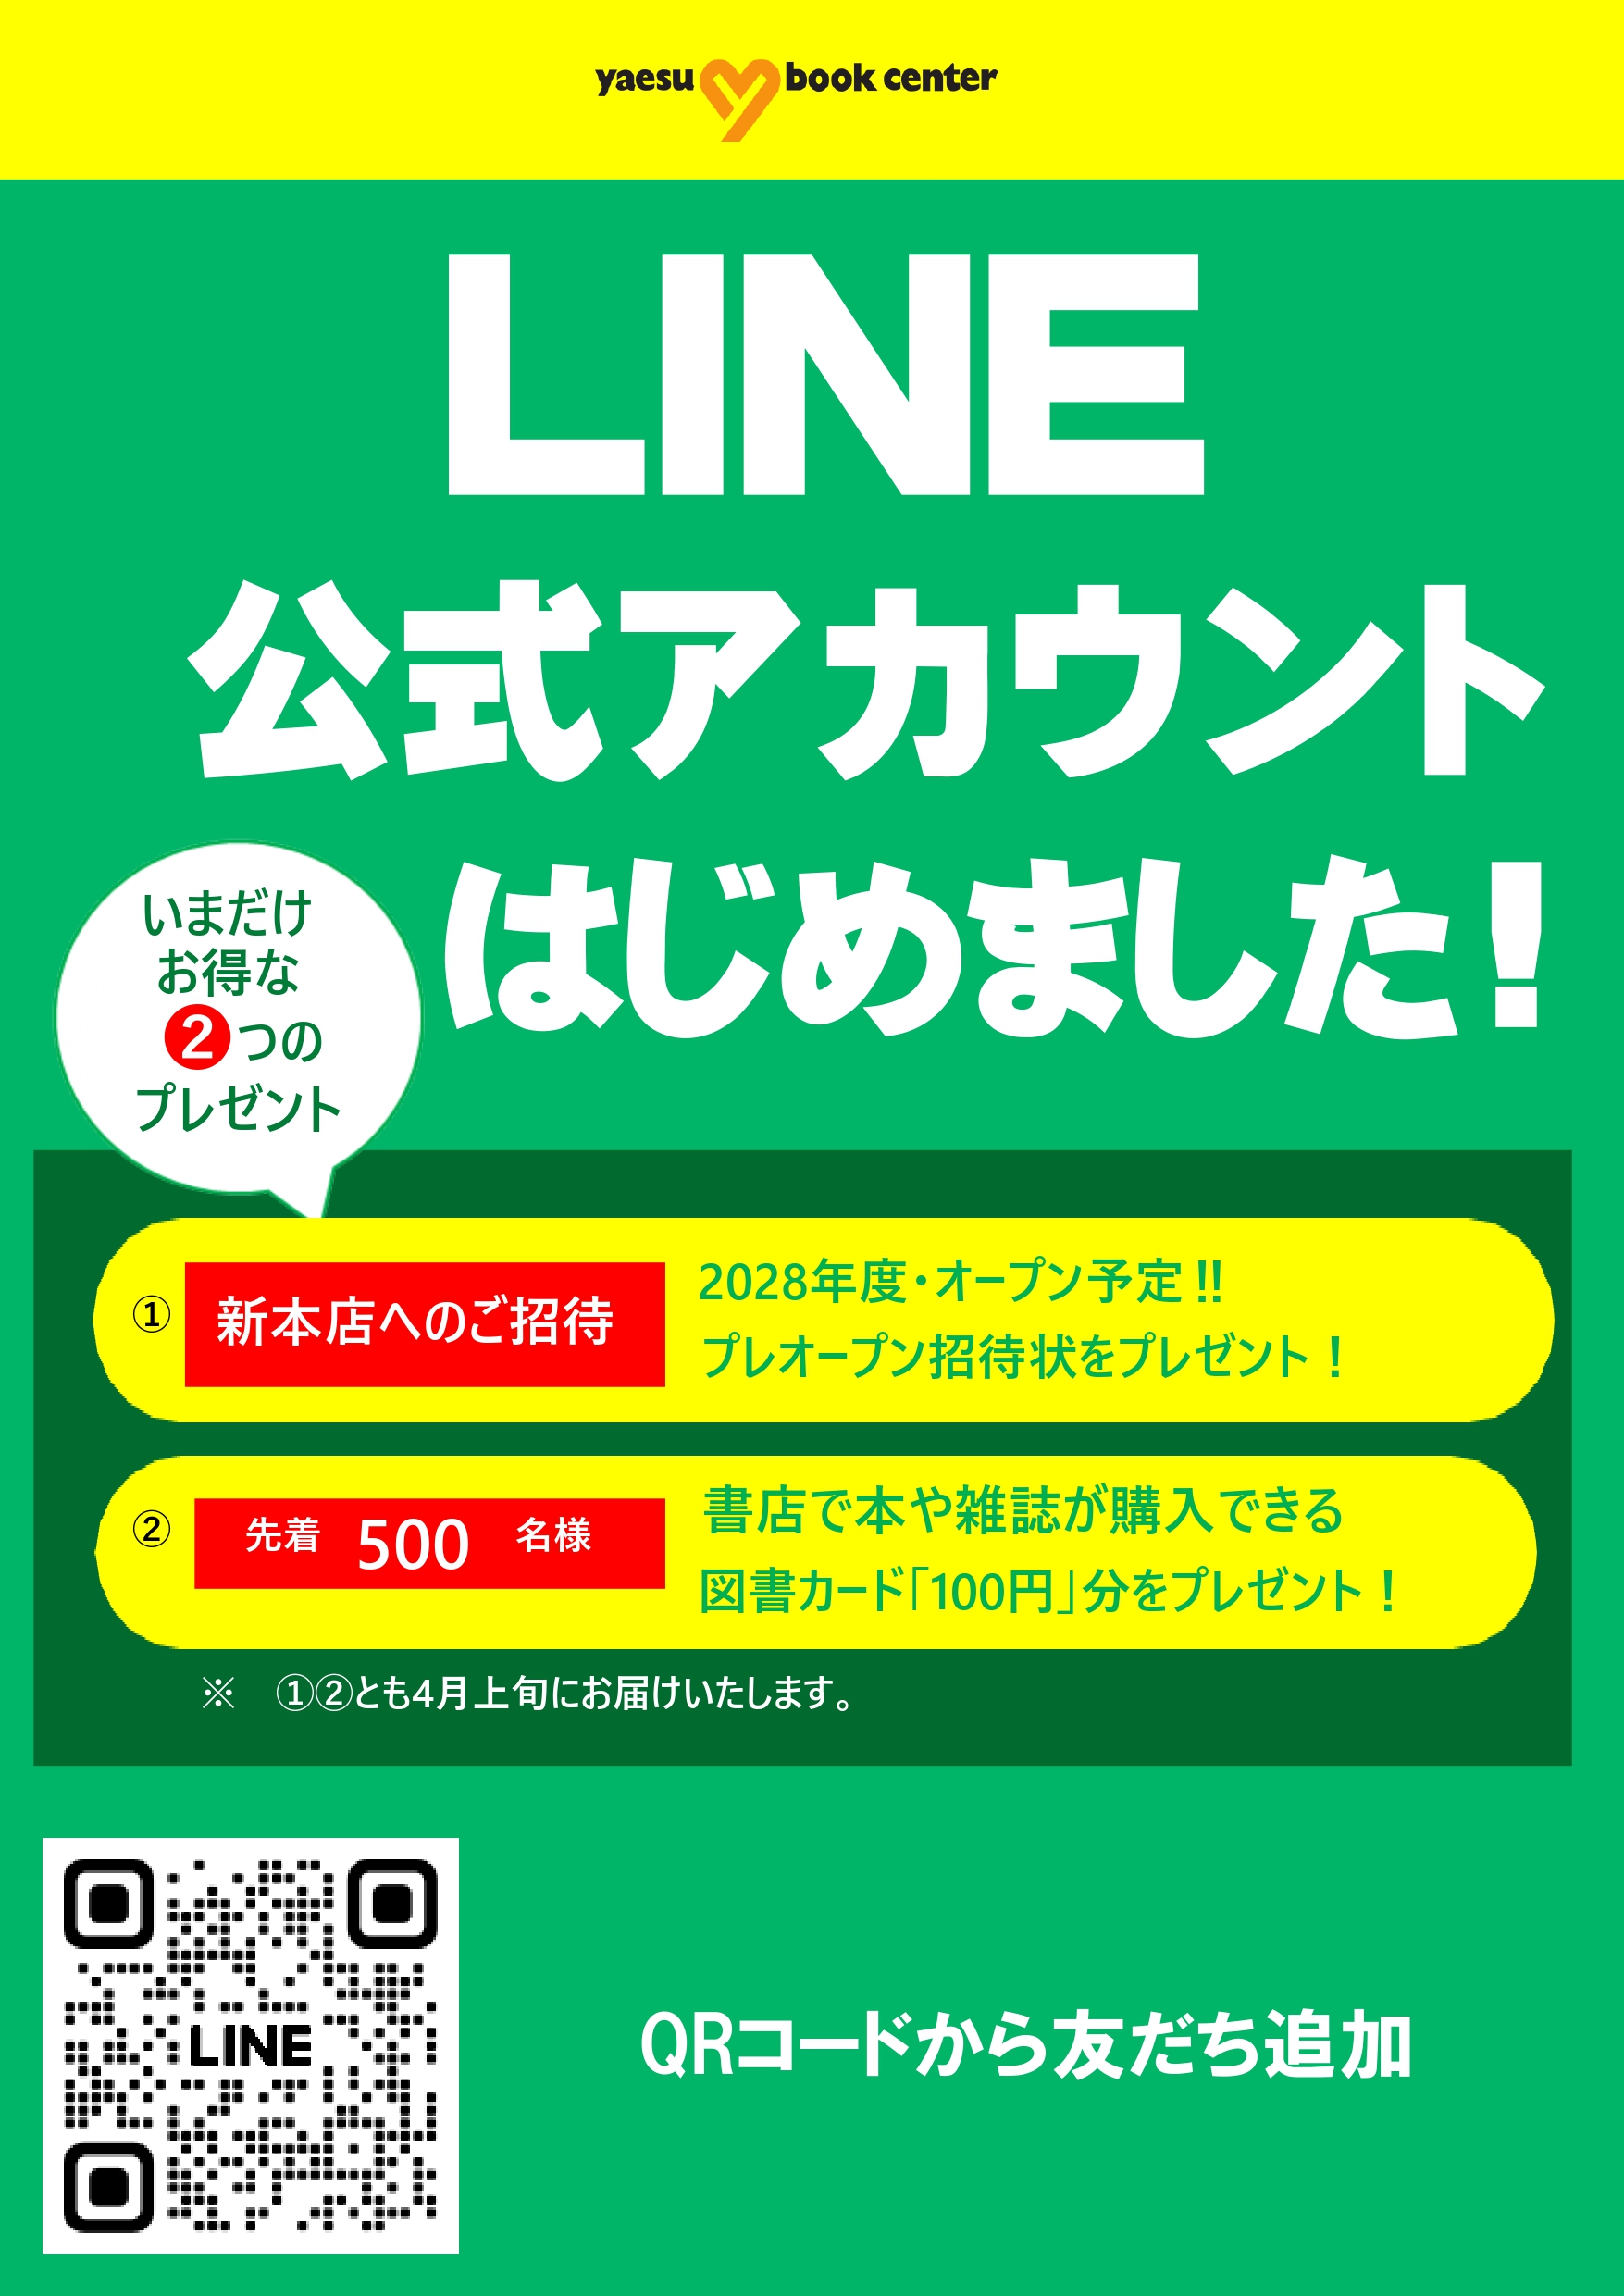 LINE公式アカウントはじめました！ | 八重洲ブックセンター